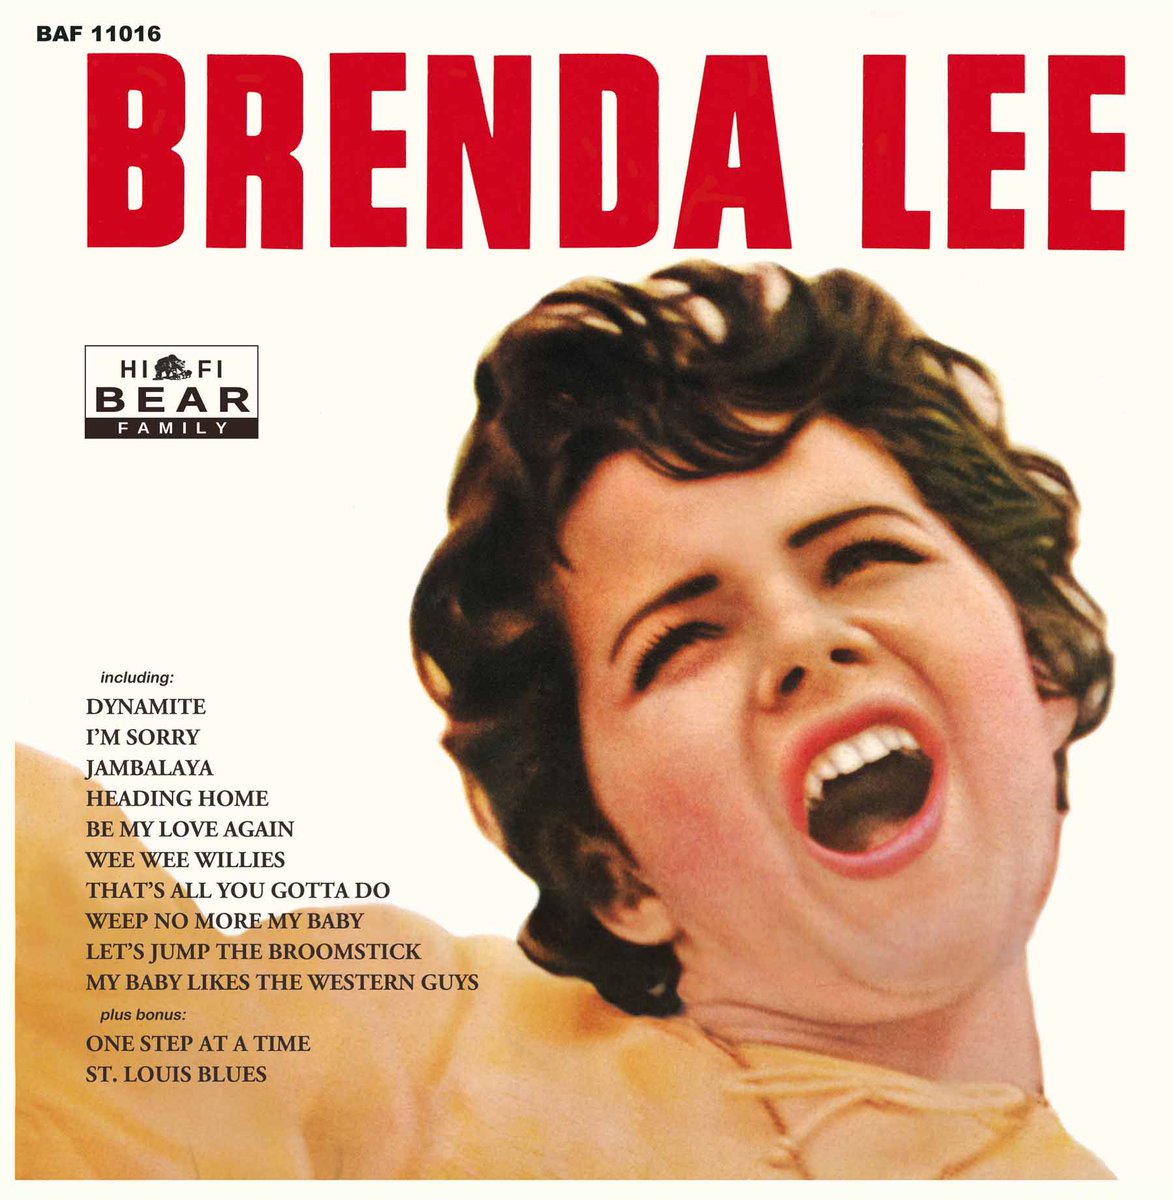 1960AOTY: Joan Baez - Joan Baez#2: John Coltrane - Giant Steps#3: Brenda Lee - Brenda Lee#4: Etta James - At Last!Total: 9